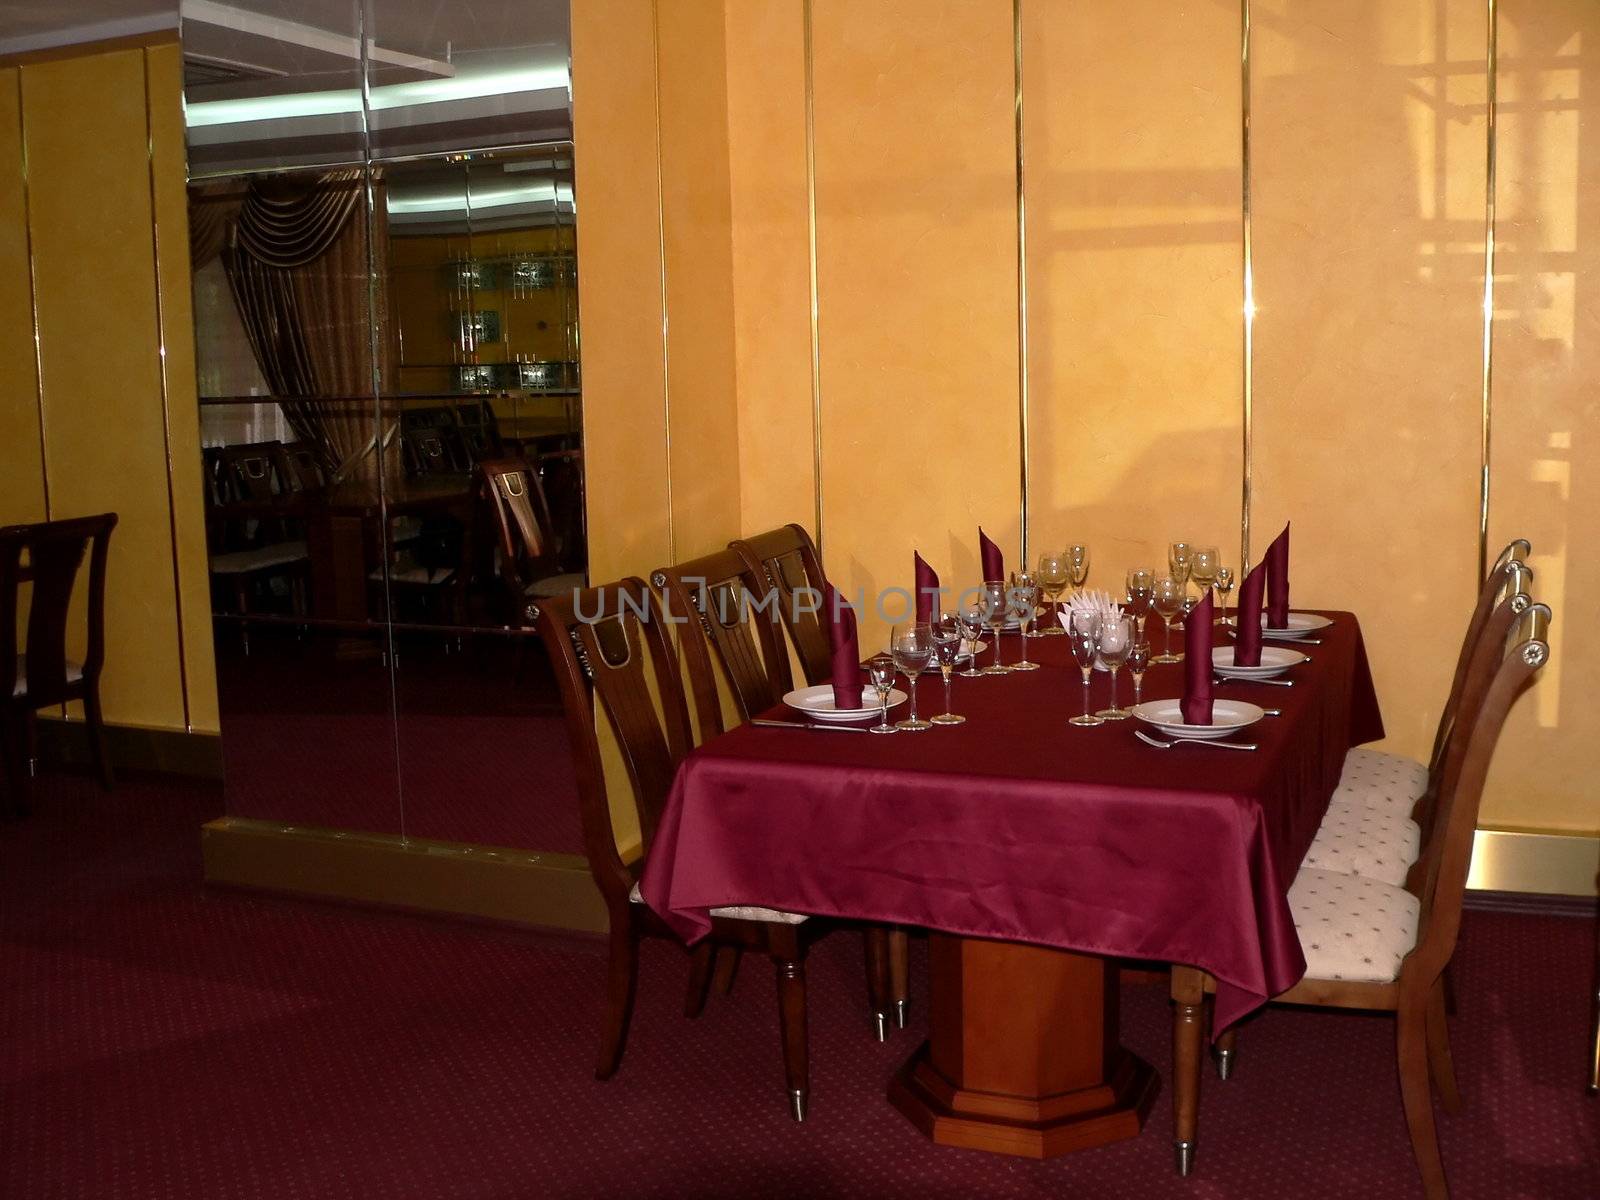 Table with crimson table cloth on restaurant